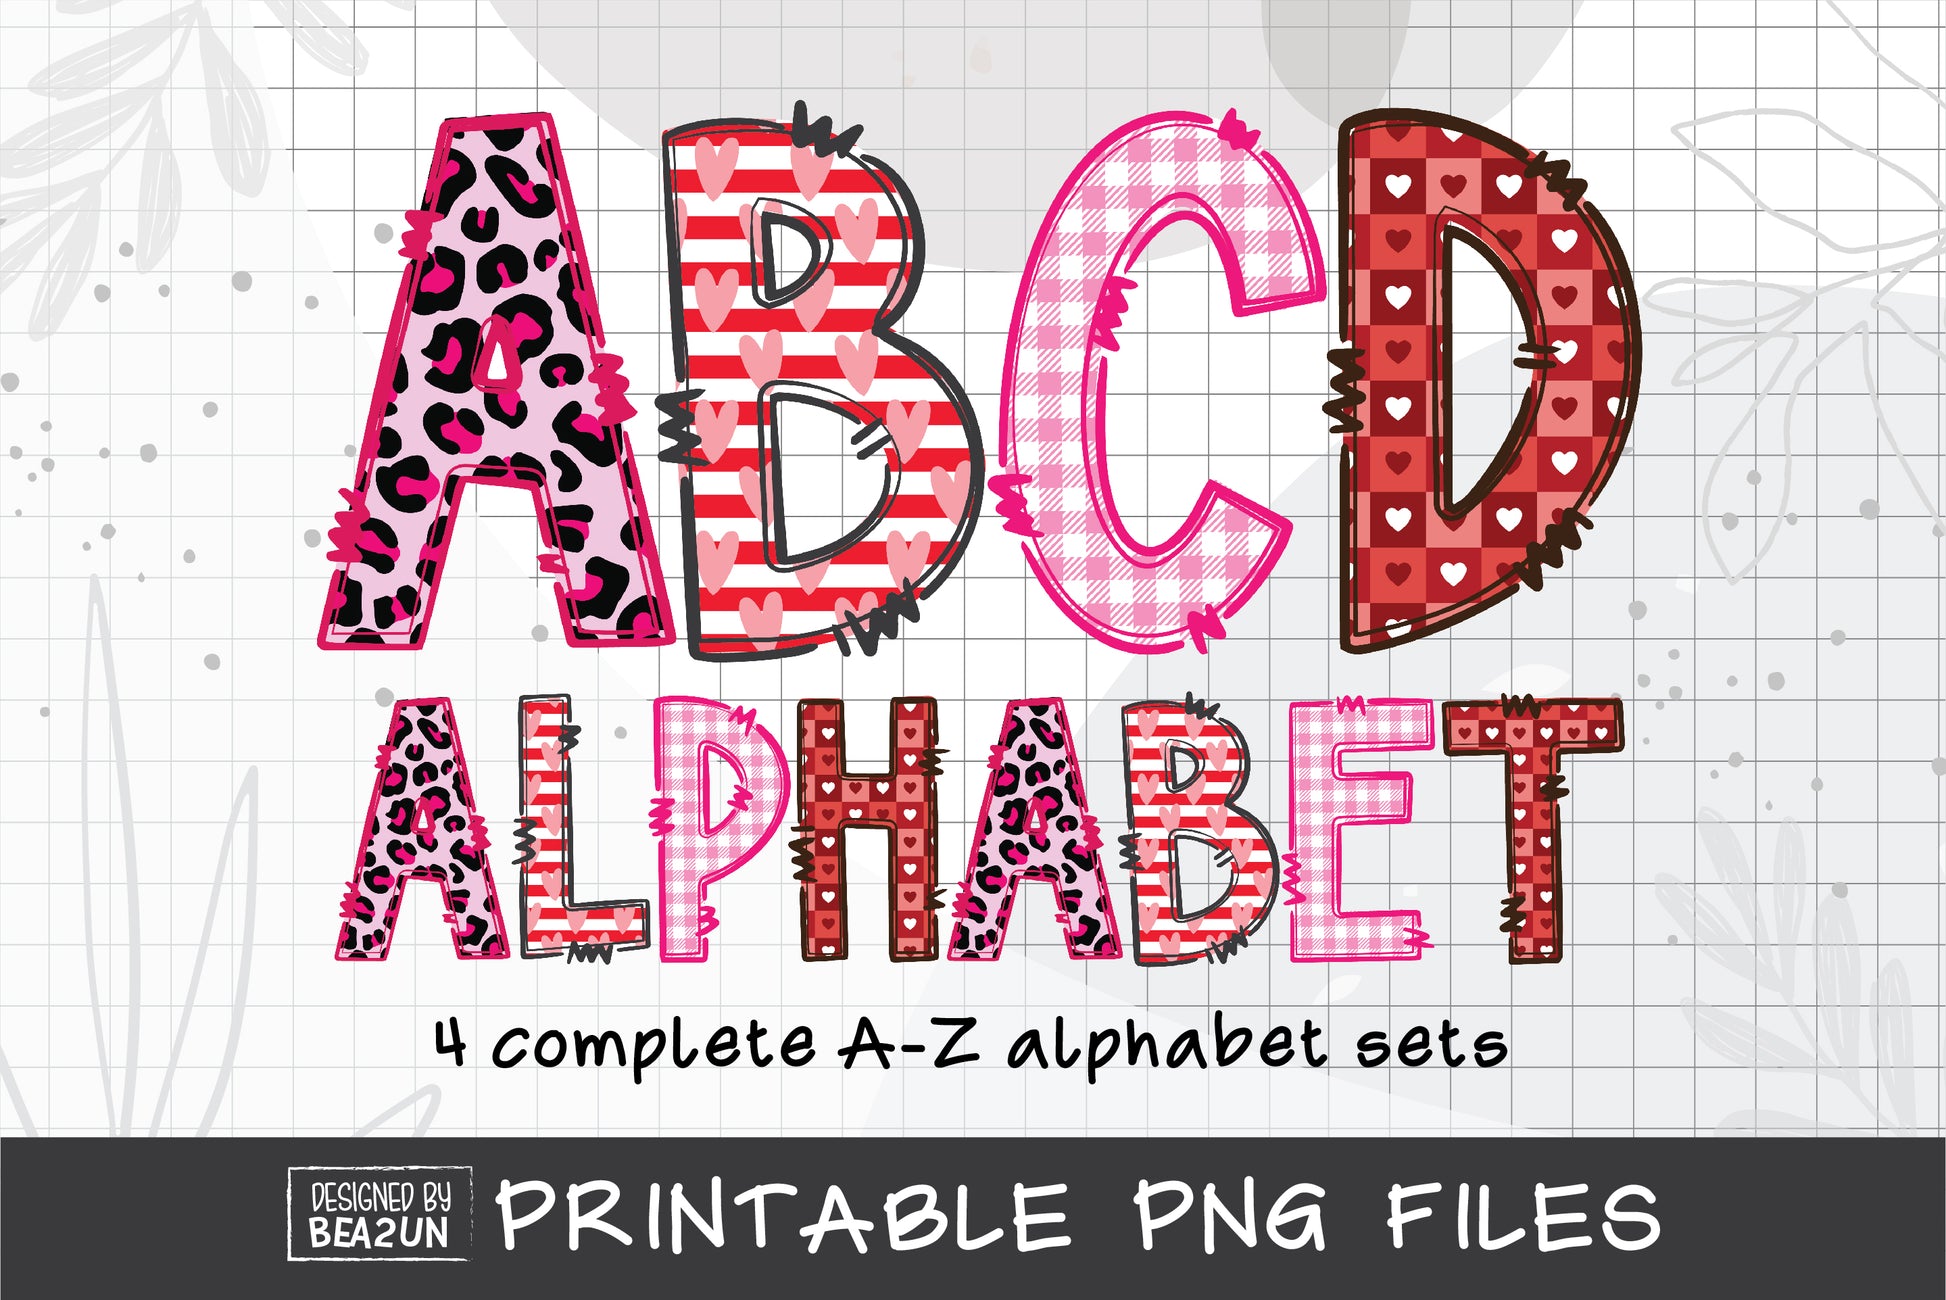 Leopard Alphabet Letters Sublimation Graphic by KumaBearStudio